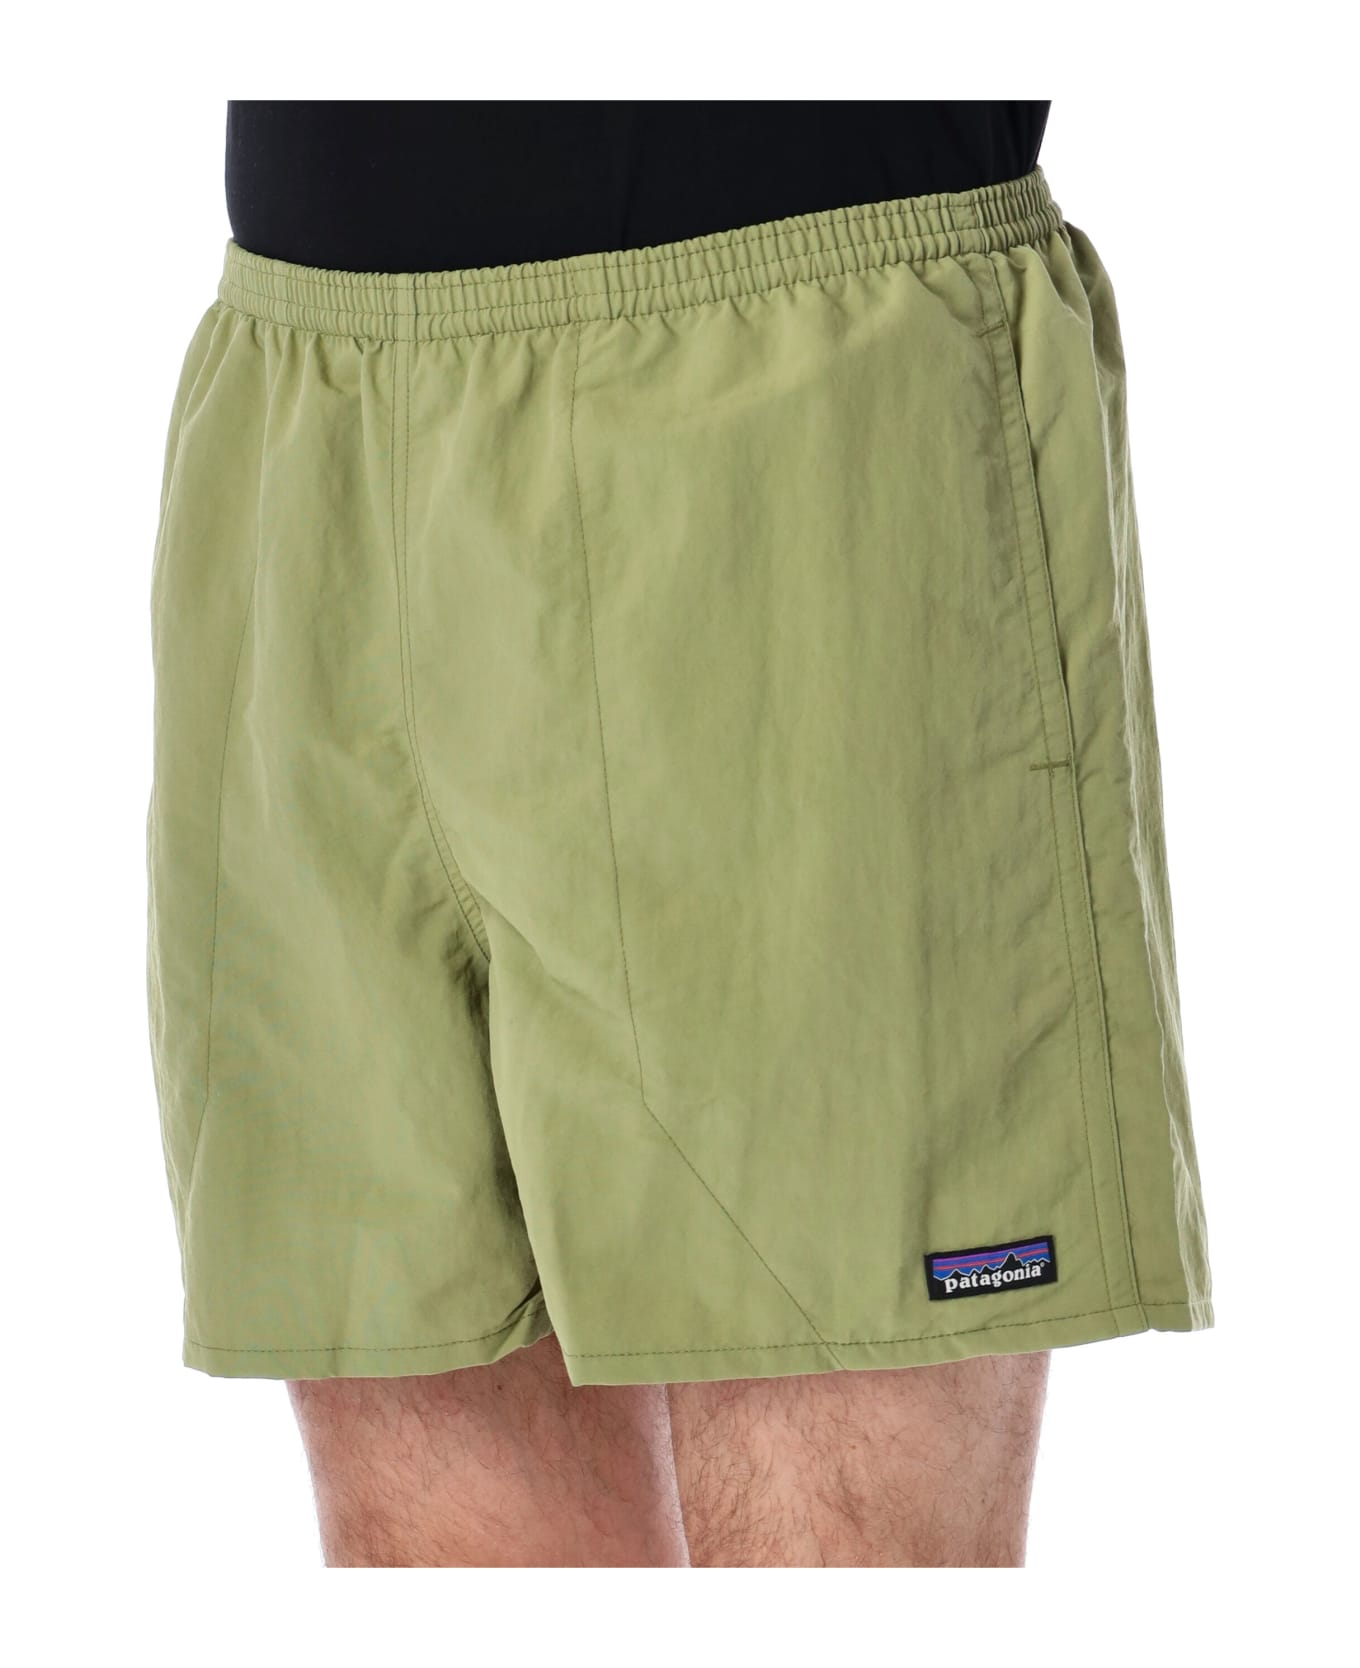 Patagonia Baggies Shorts - 5" - BUCKHORN GREEN ショートパンツ